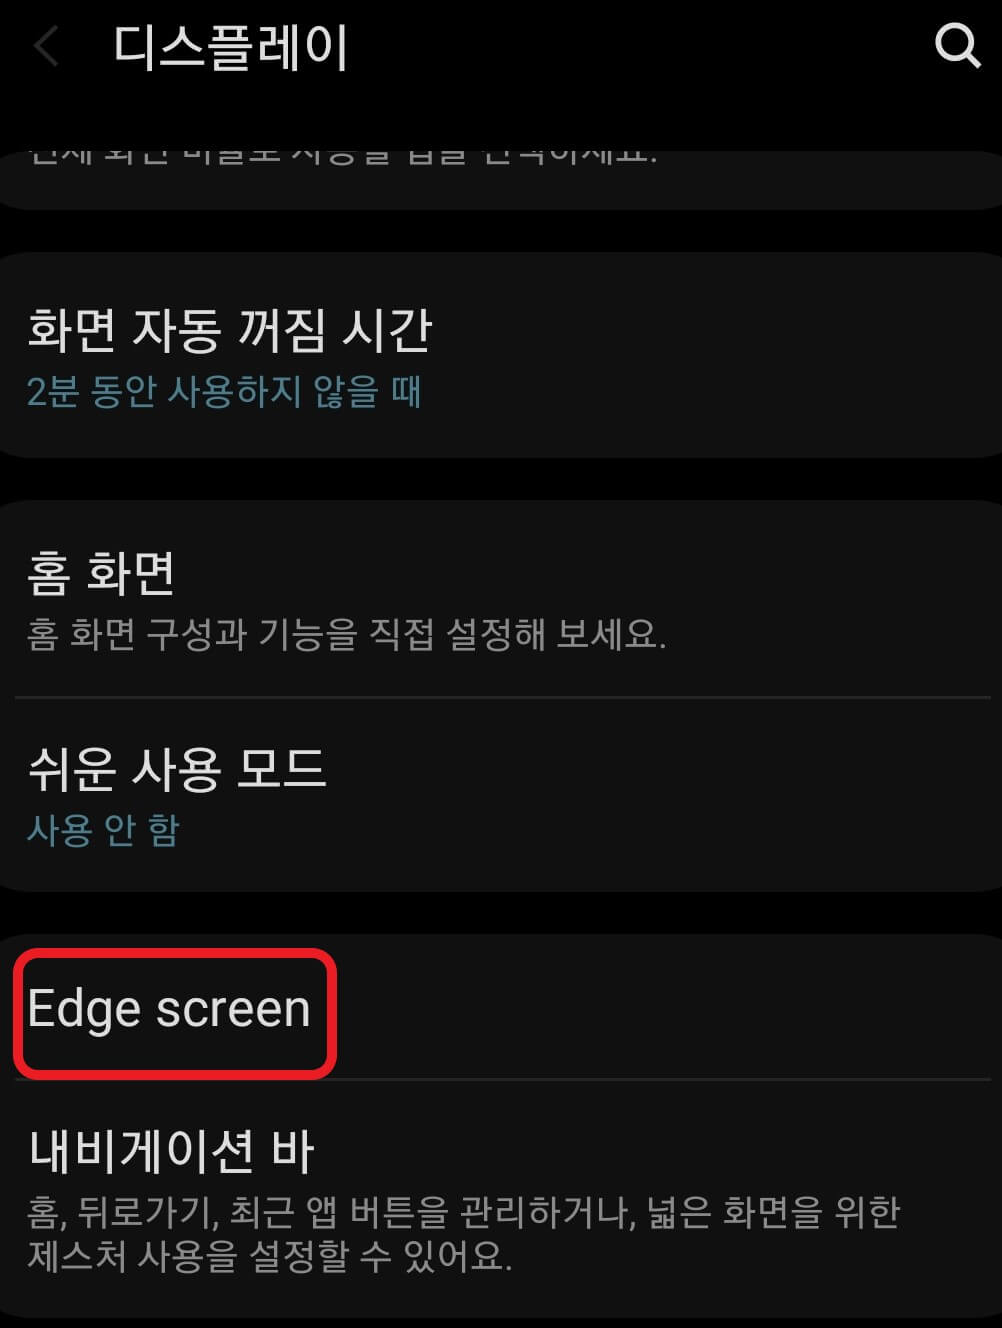 Edge screen